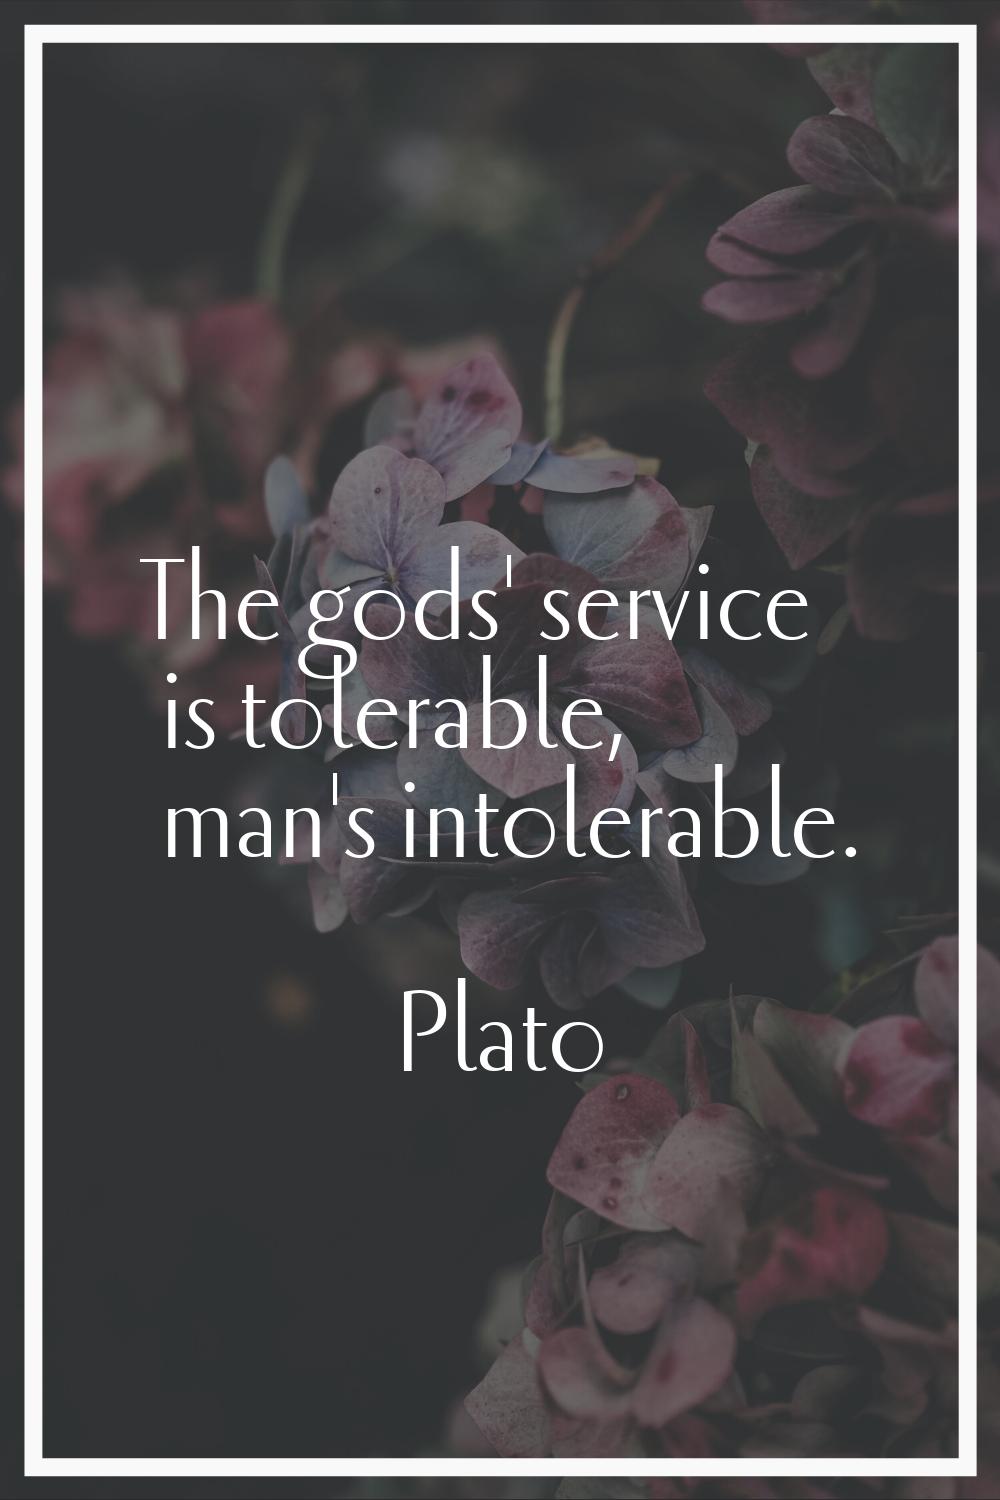 The gods' service is tolerable, man's intolerable.